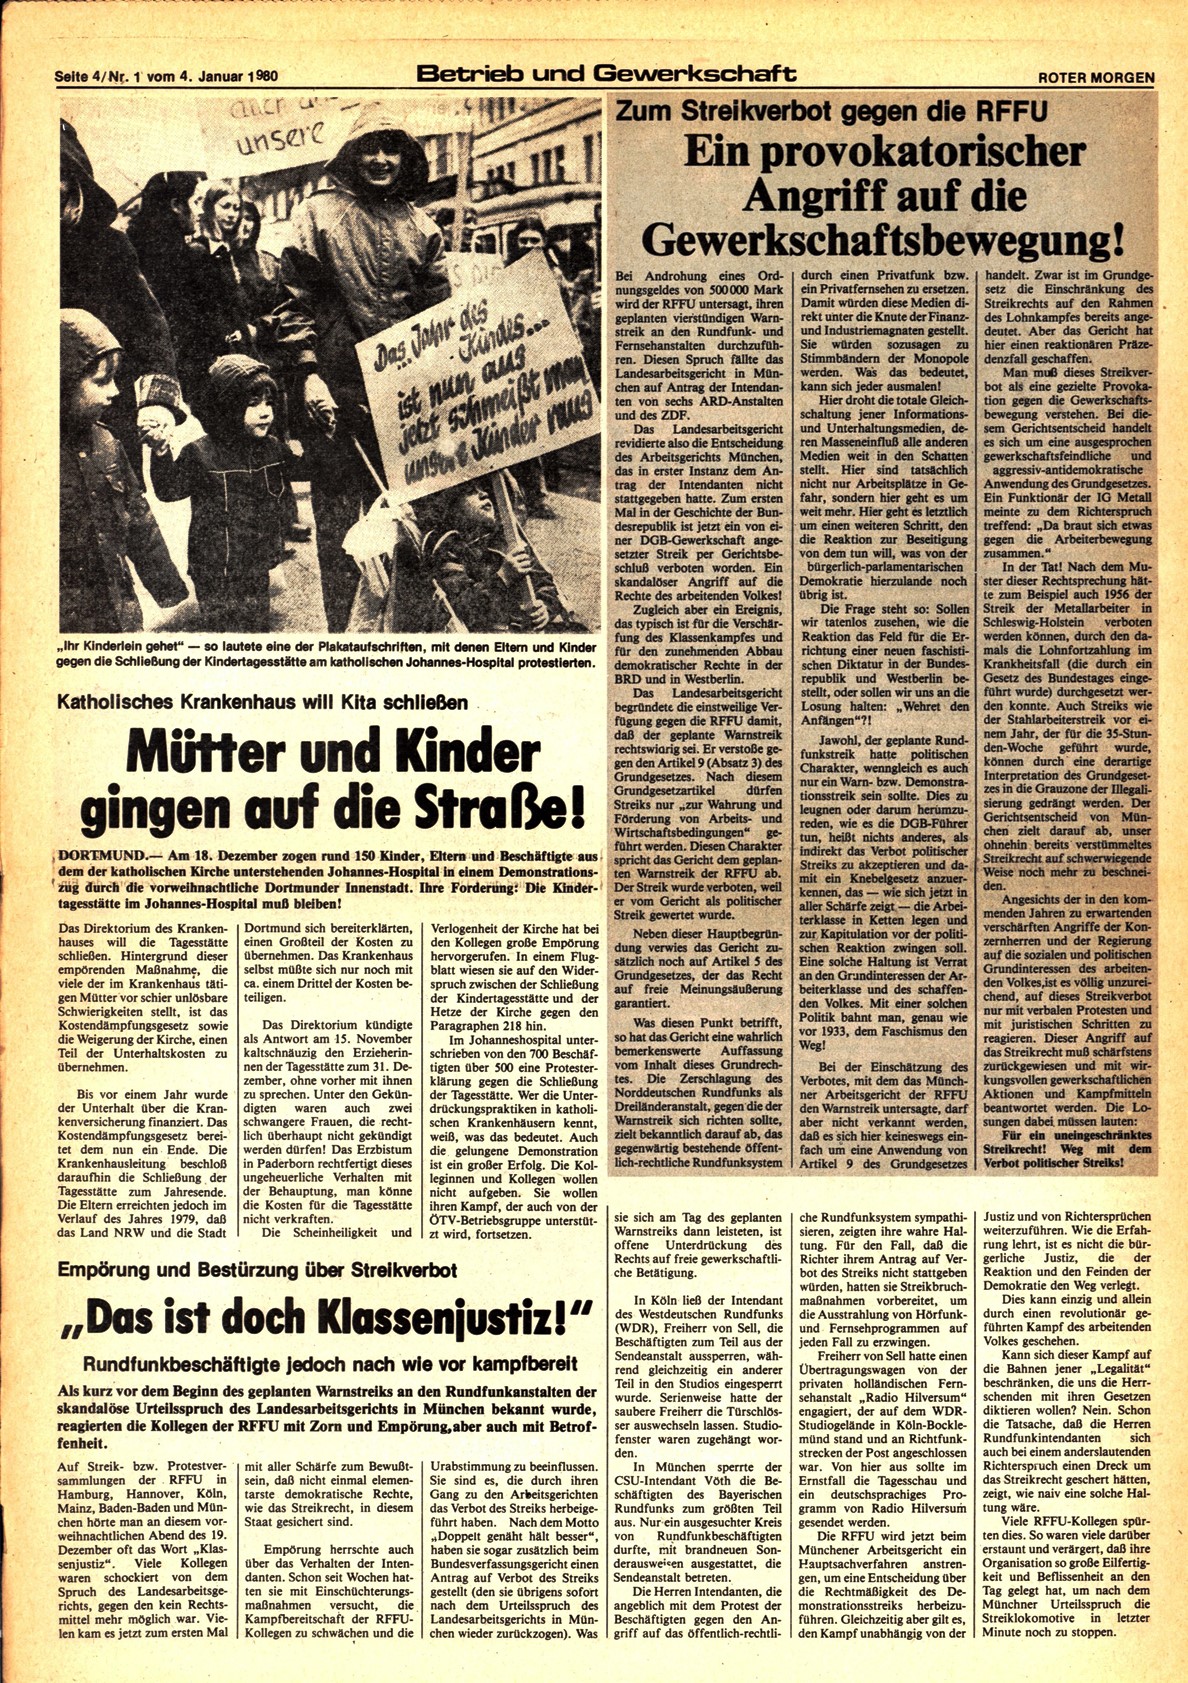 Roter Morgen, 14. Jg., 4. Januar 1980, Nr. 1, Seite 4